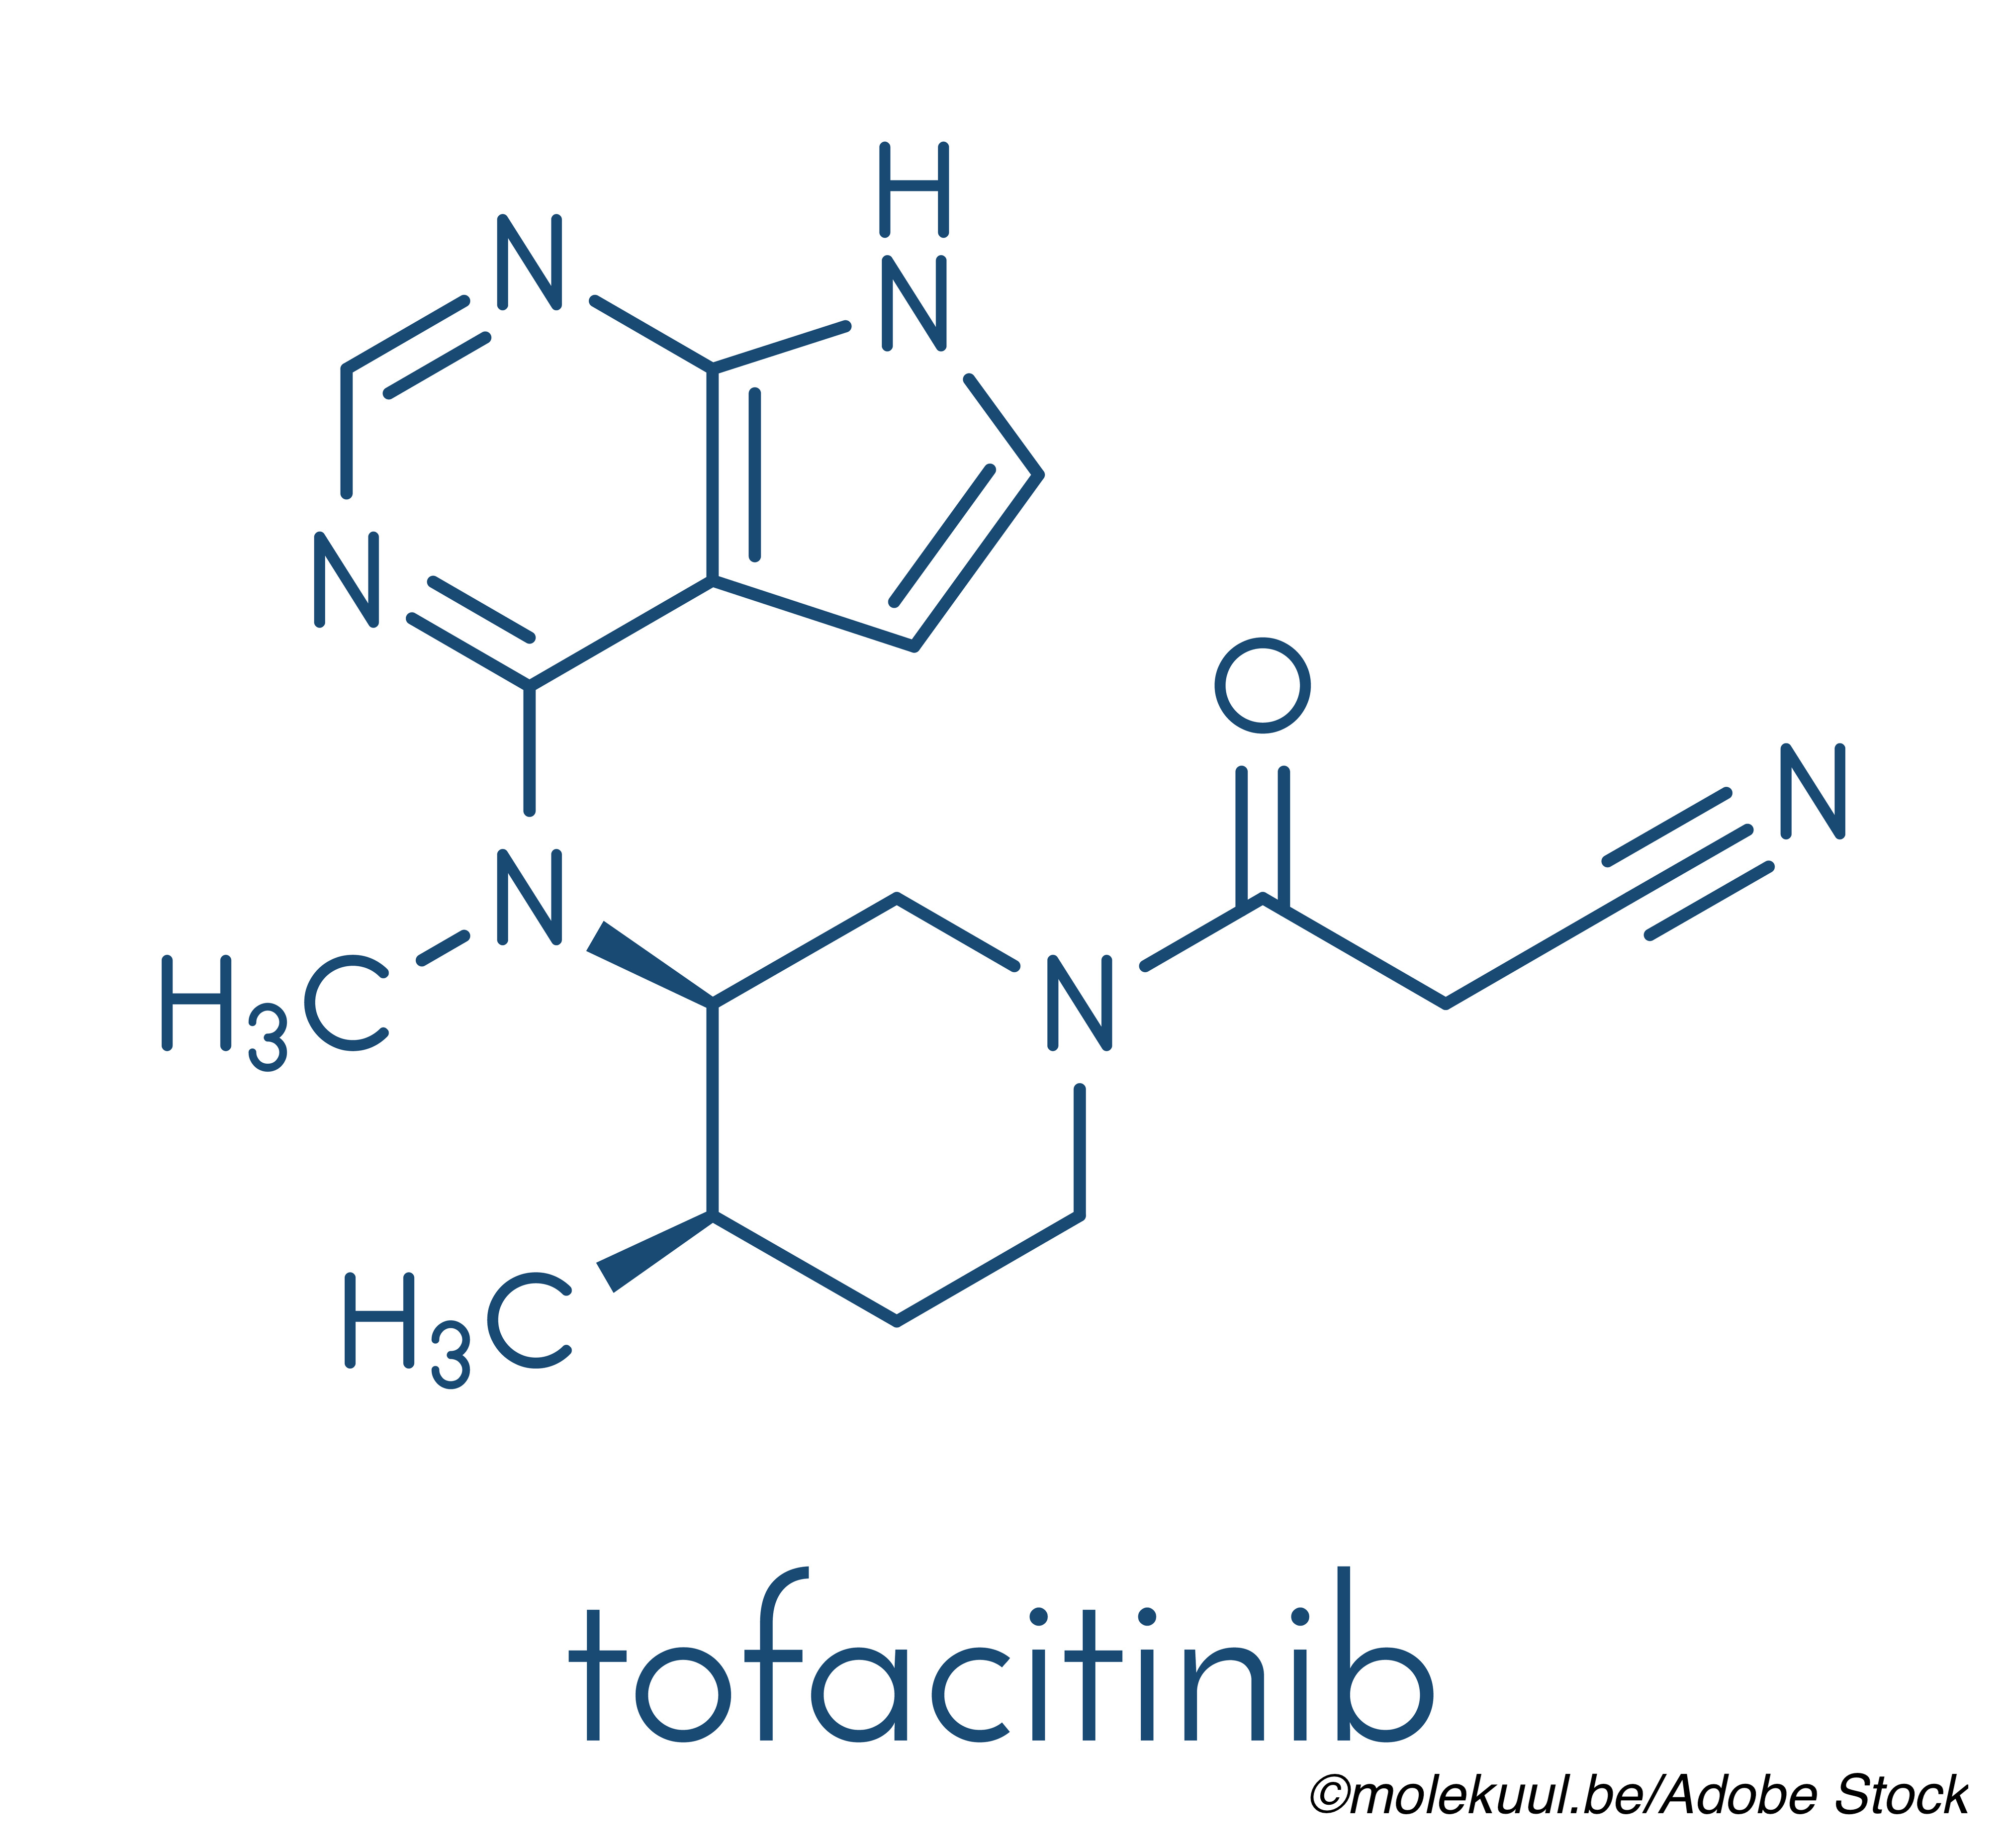 Tofacitinib Ups Cancer, Cardiovascular Risks, FDA Warns